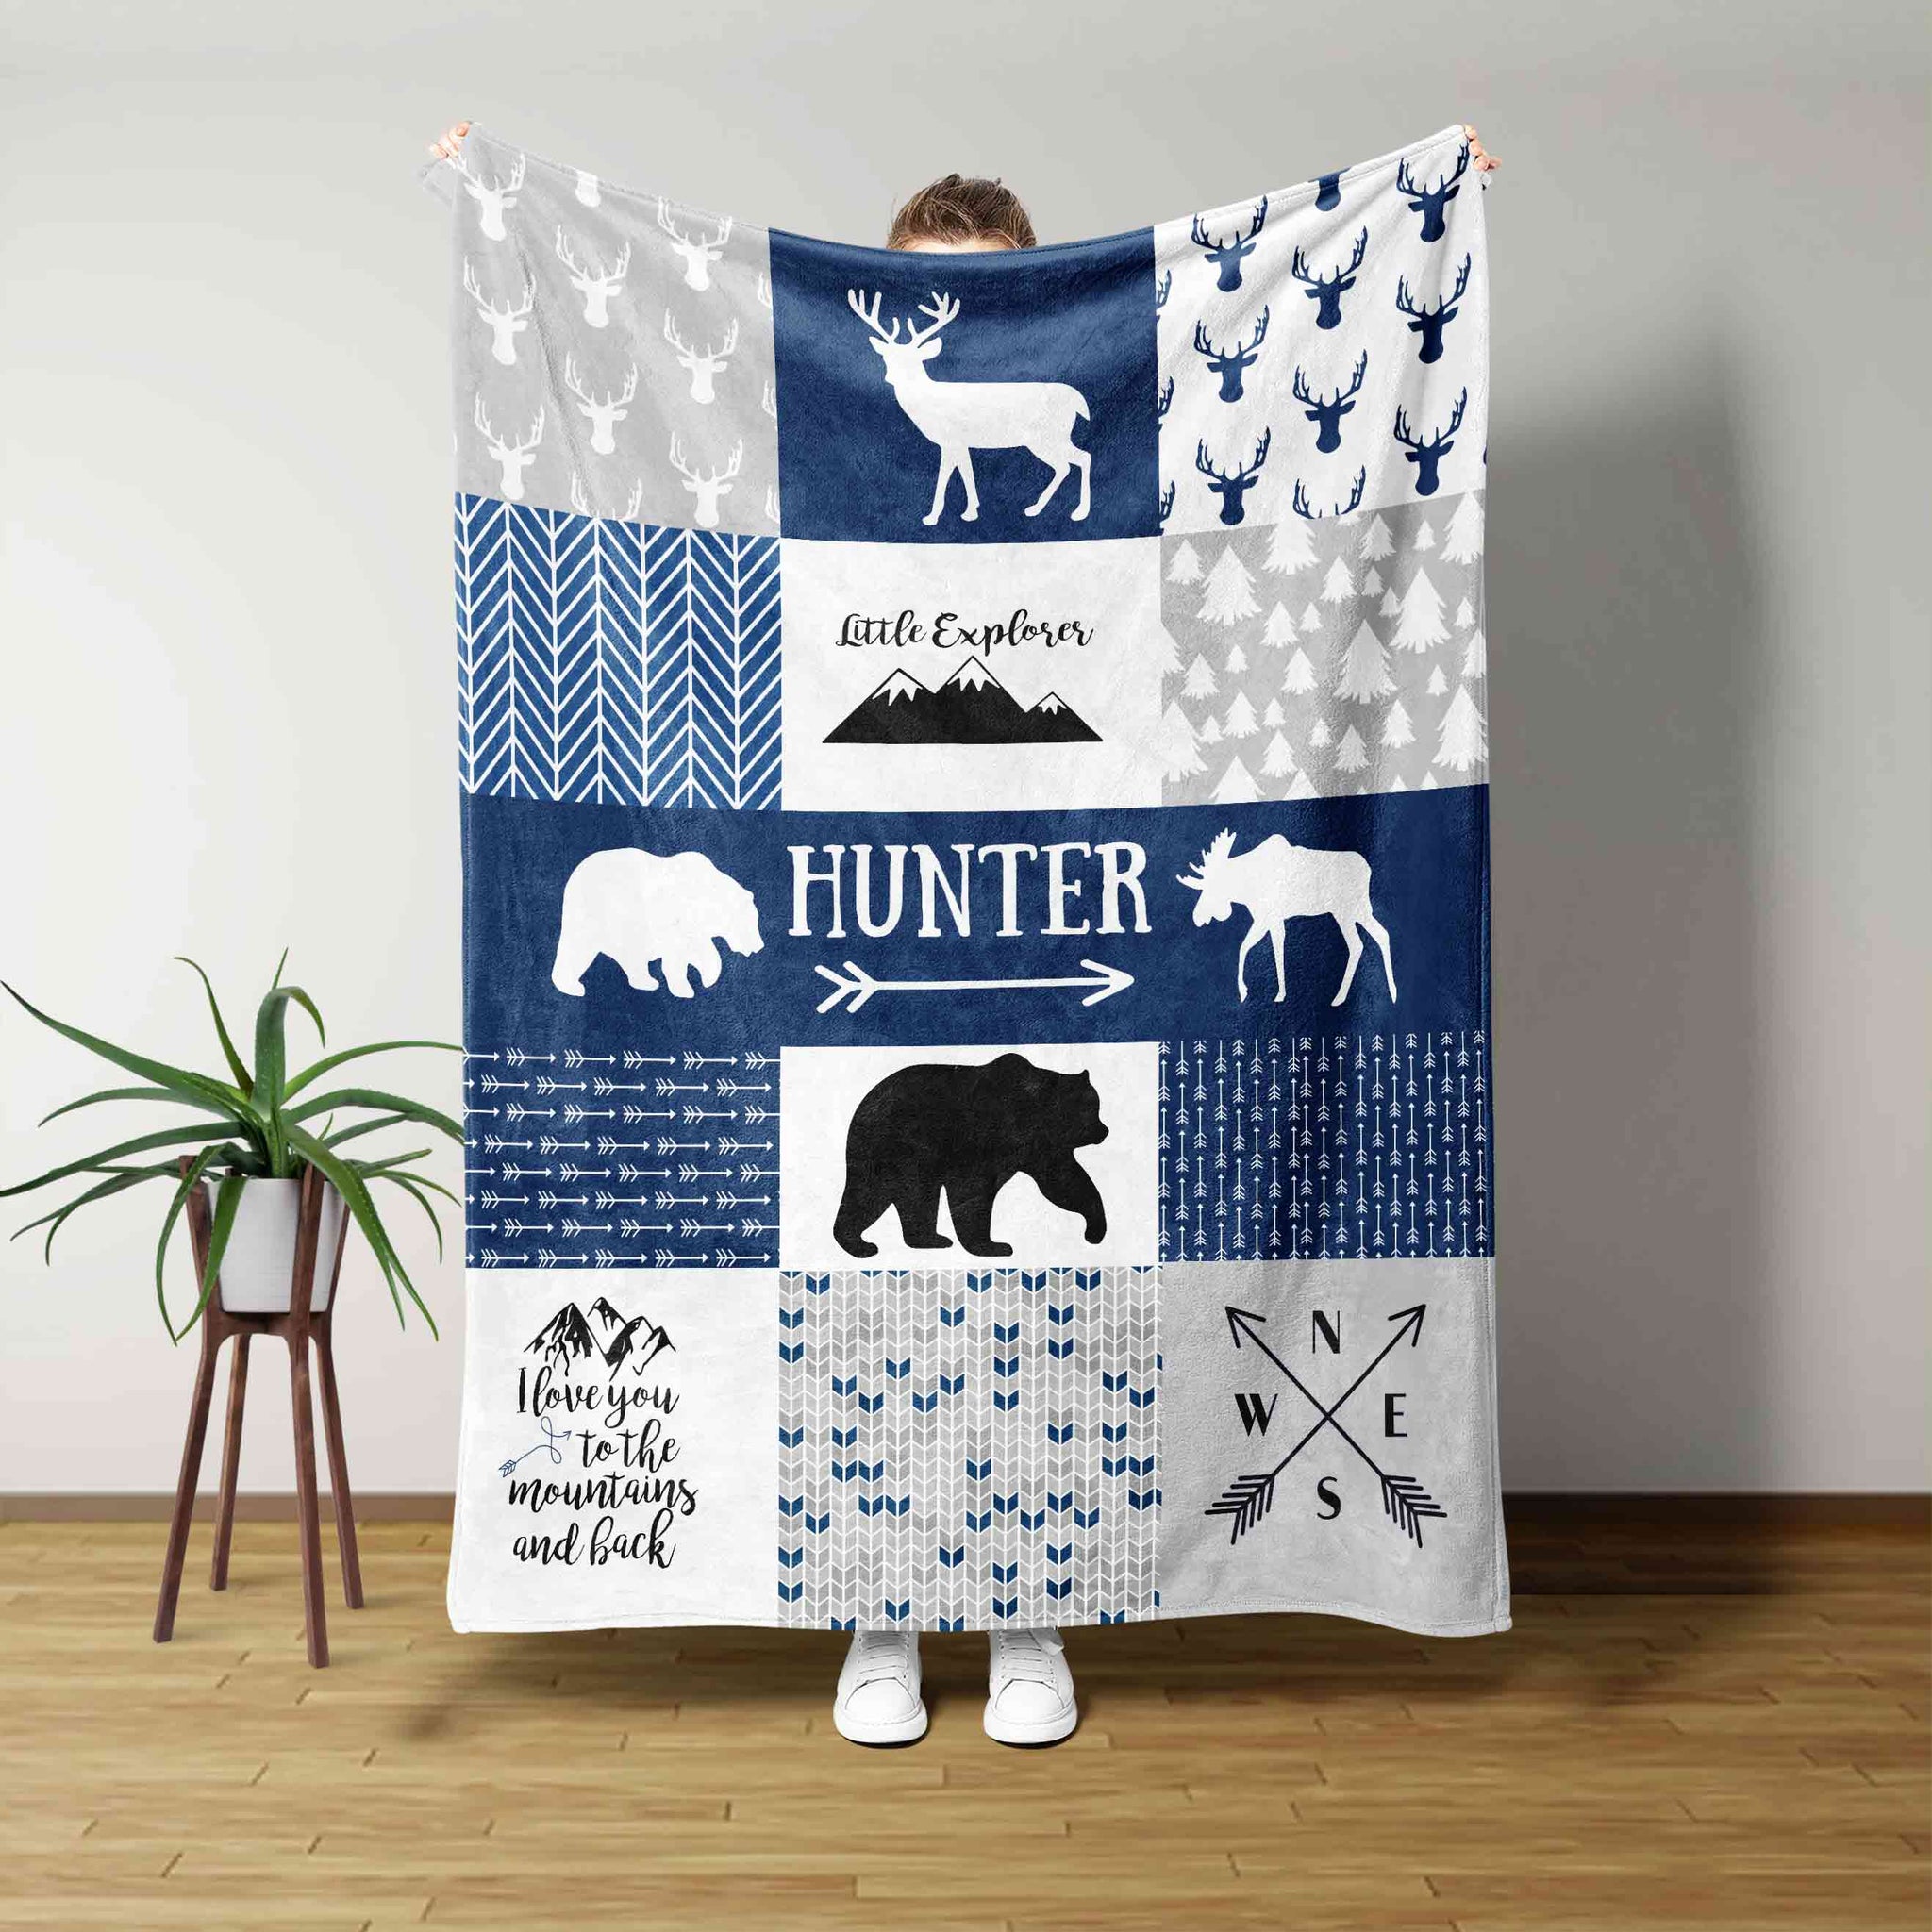 Personalized Name Blanket, Baby Blanket, Bear Blanket, Deer Blanket, Arrow Blanket, Winter Blanket, Gift Blanket